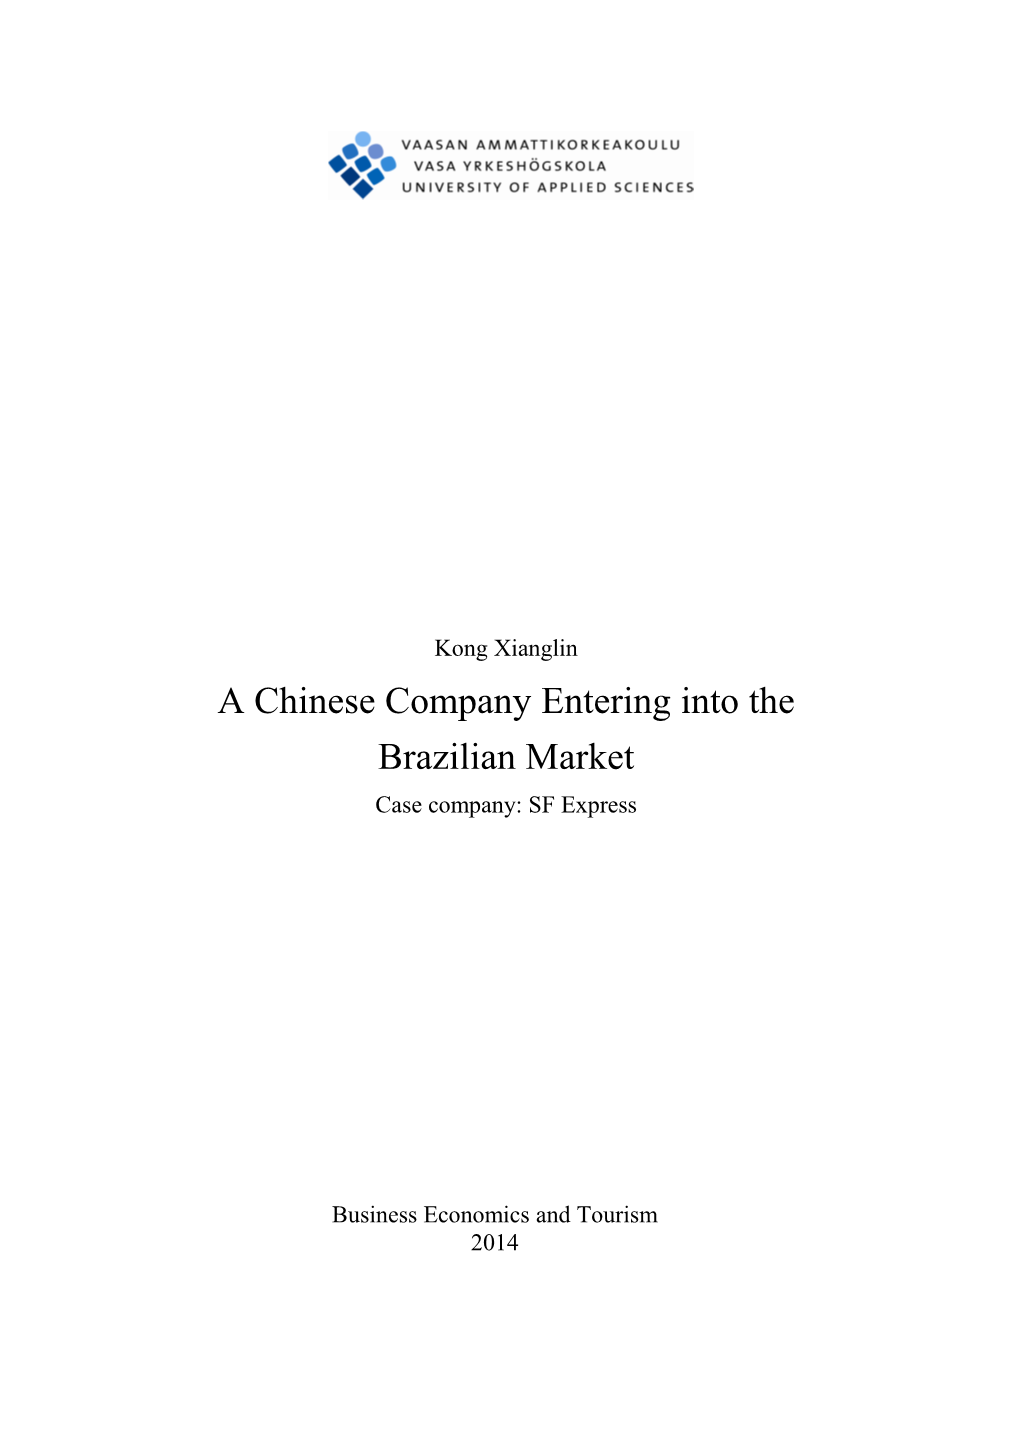 A Chinese Company Entering Into the Brazilian Market Case Company: SF Express